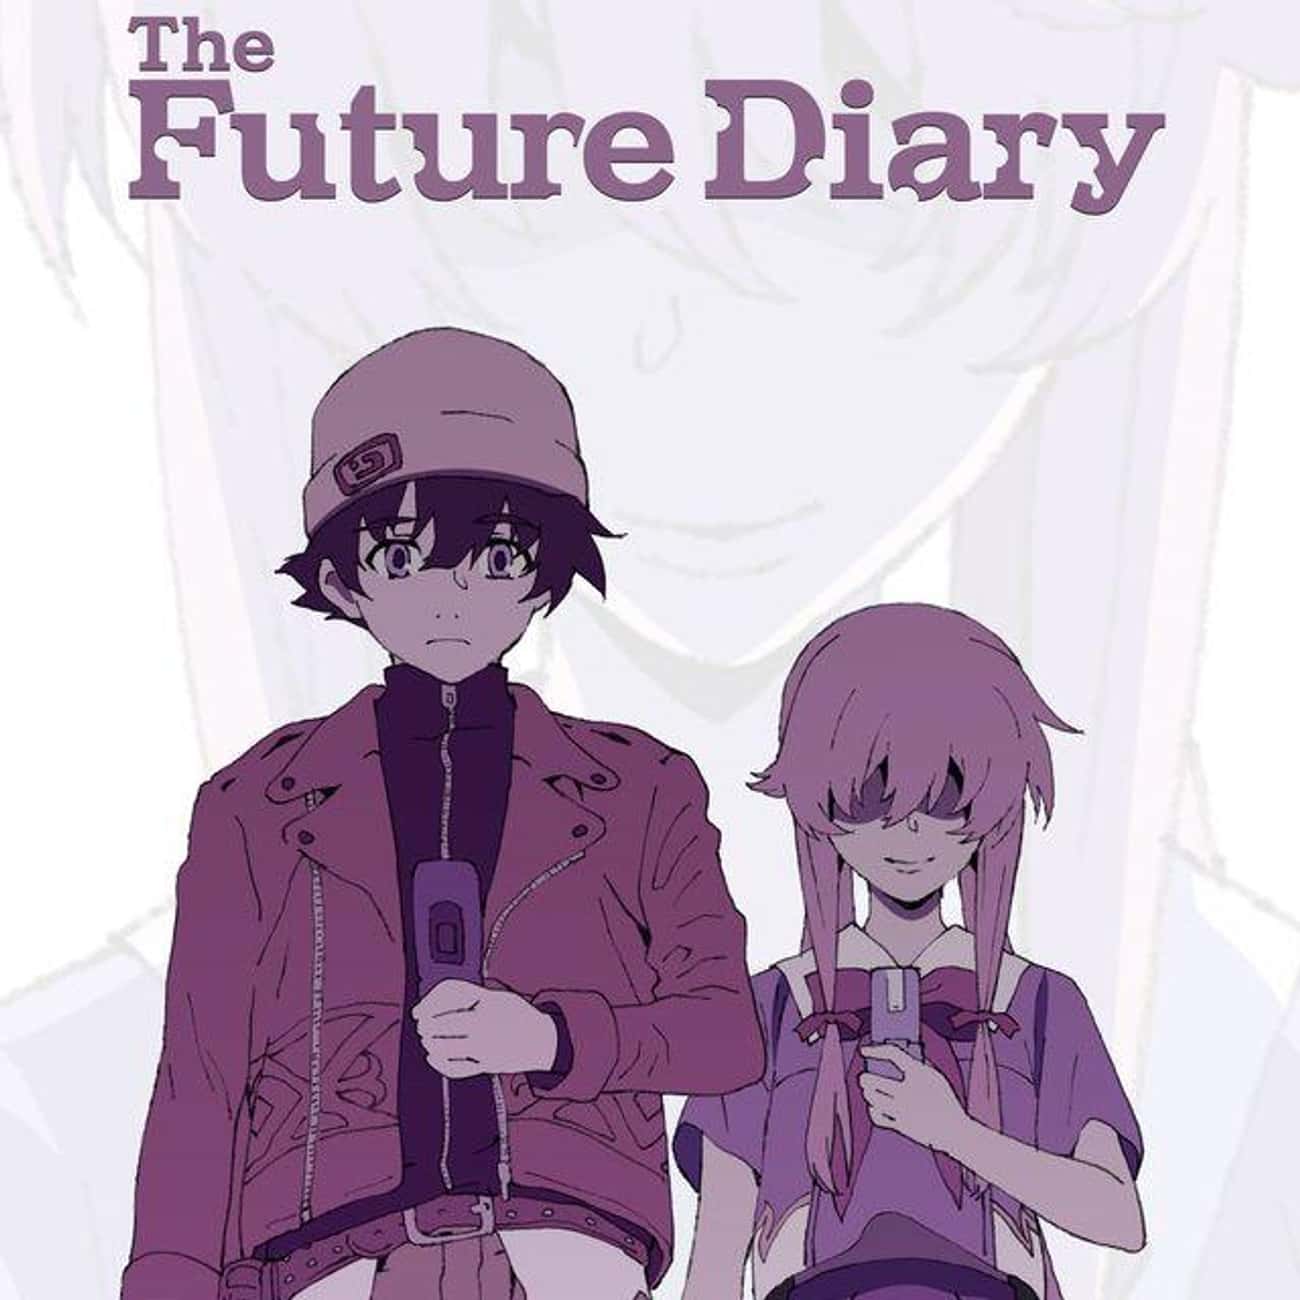 Future Diary